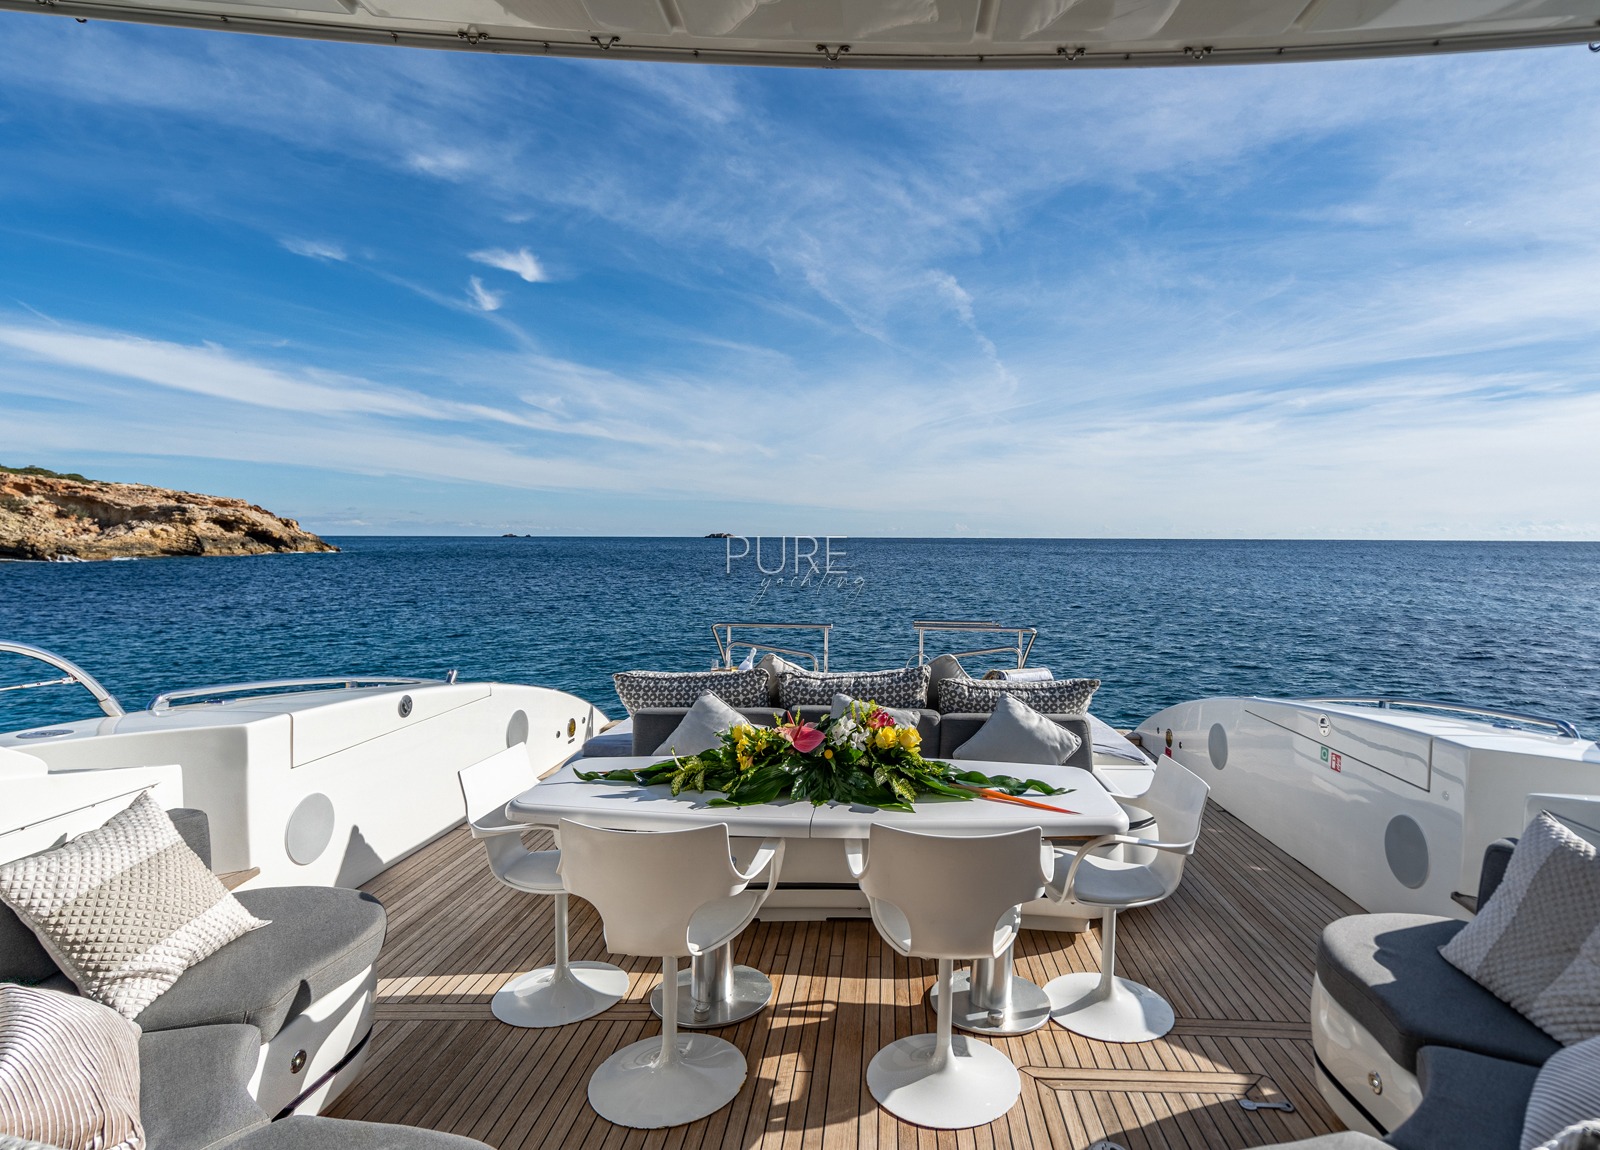 upperdeck luxury yacht mangusta 92 five stars balearics